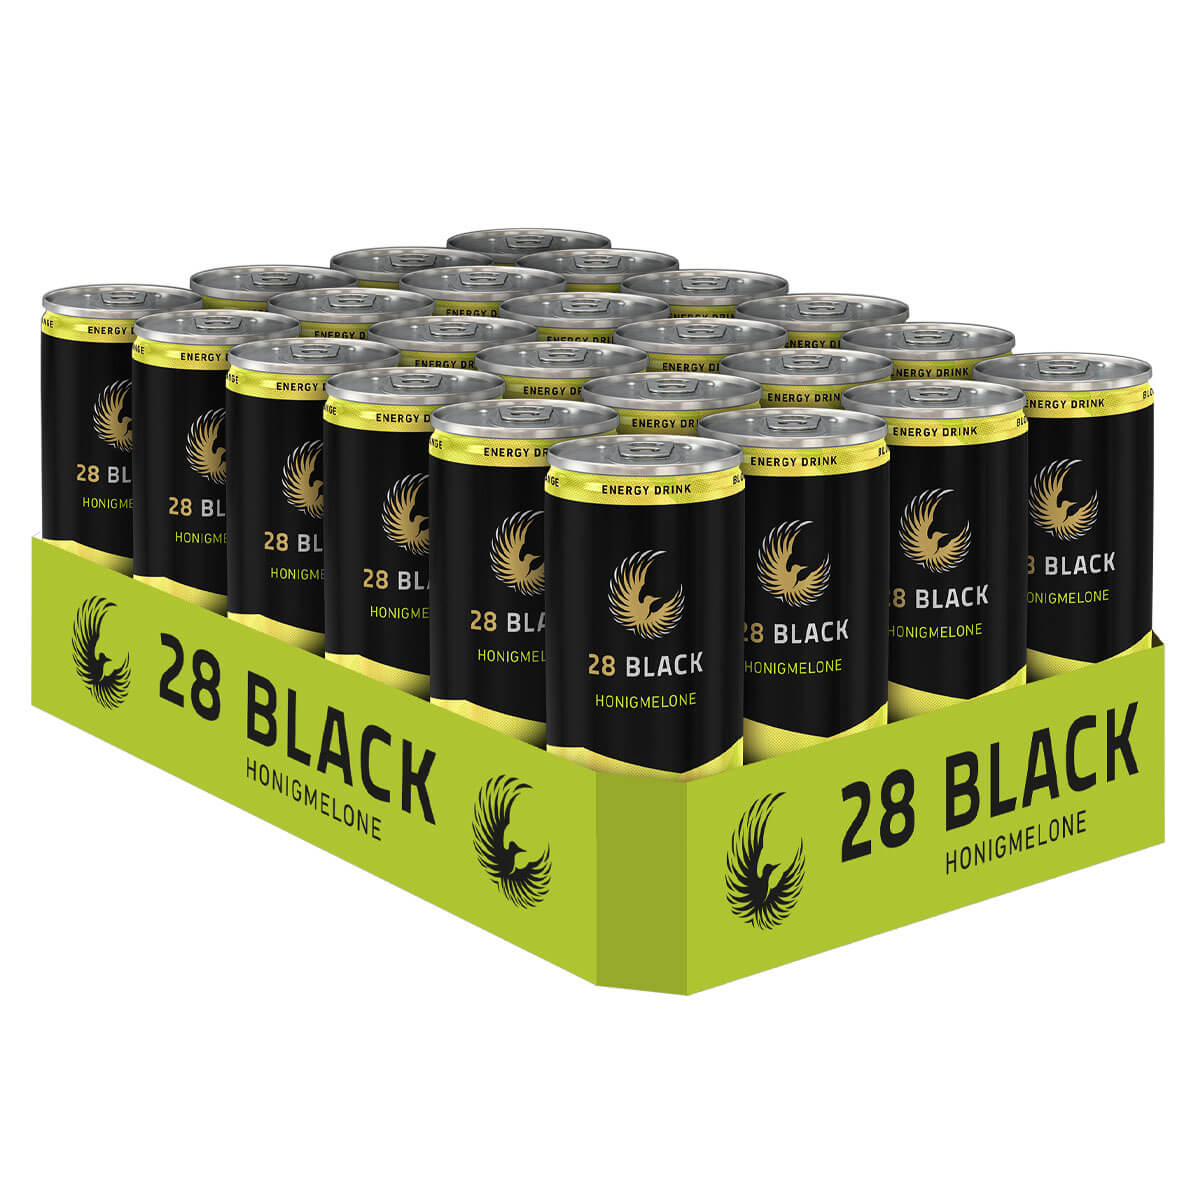 28 BLACK Honigmelone 24er Tray